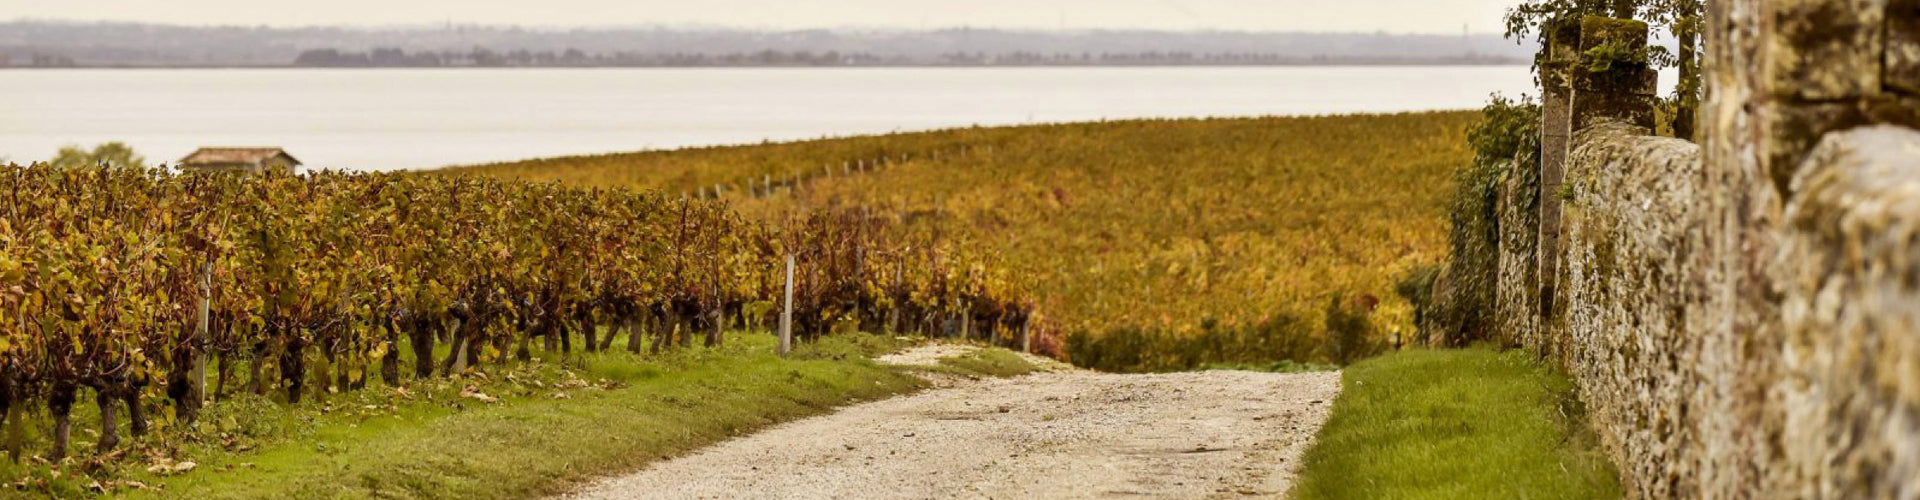 Vineyards in the Saint Estèphe Wine Region of Bordeaux